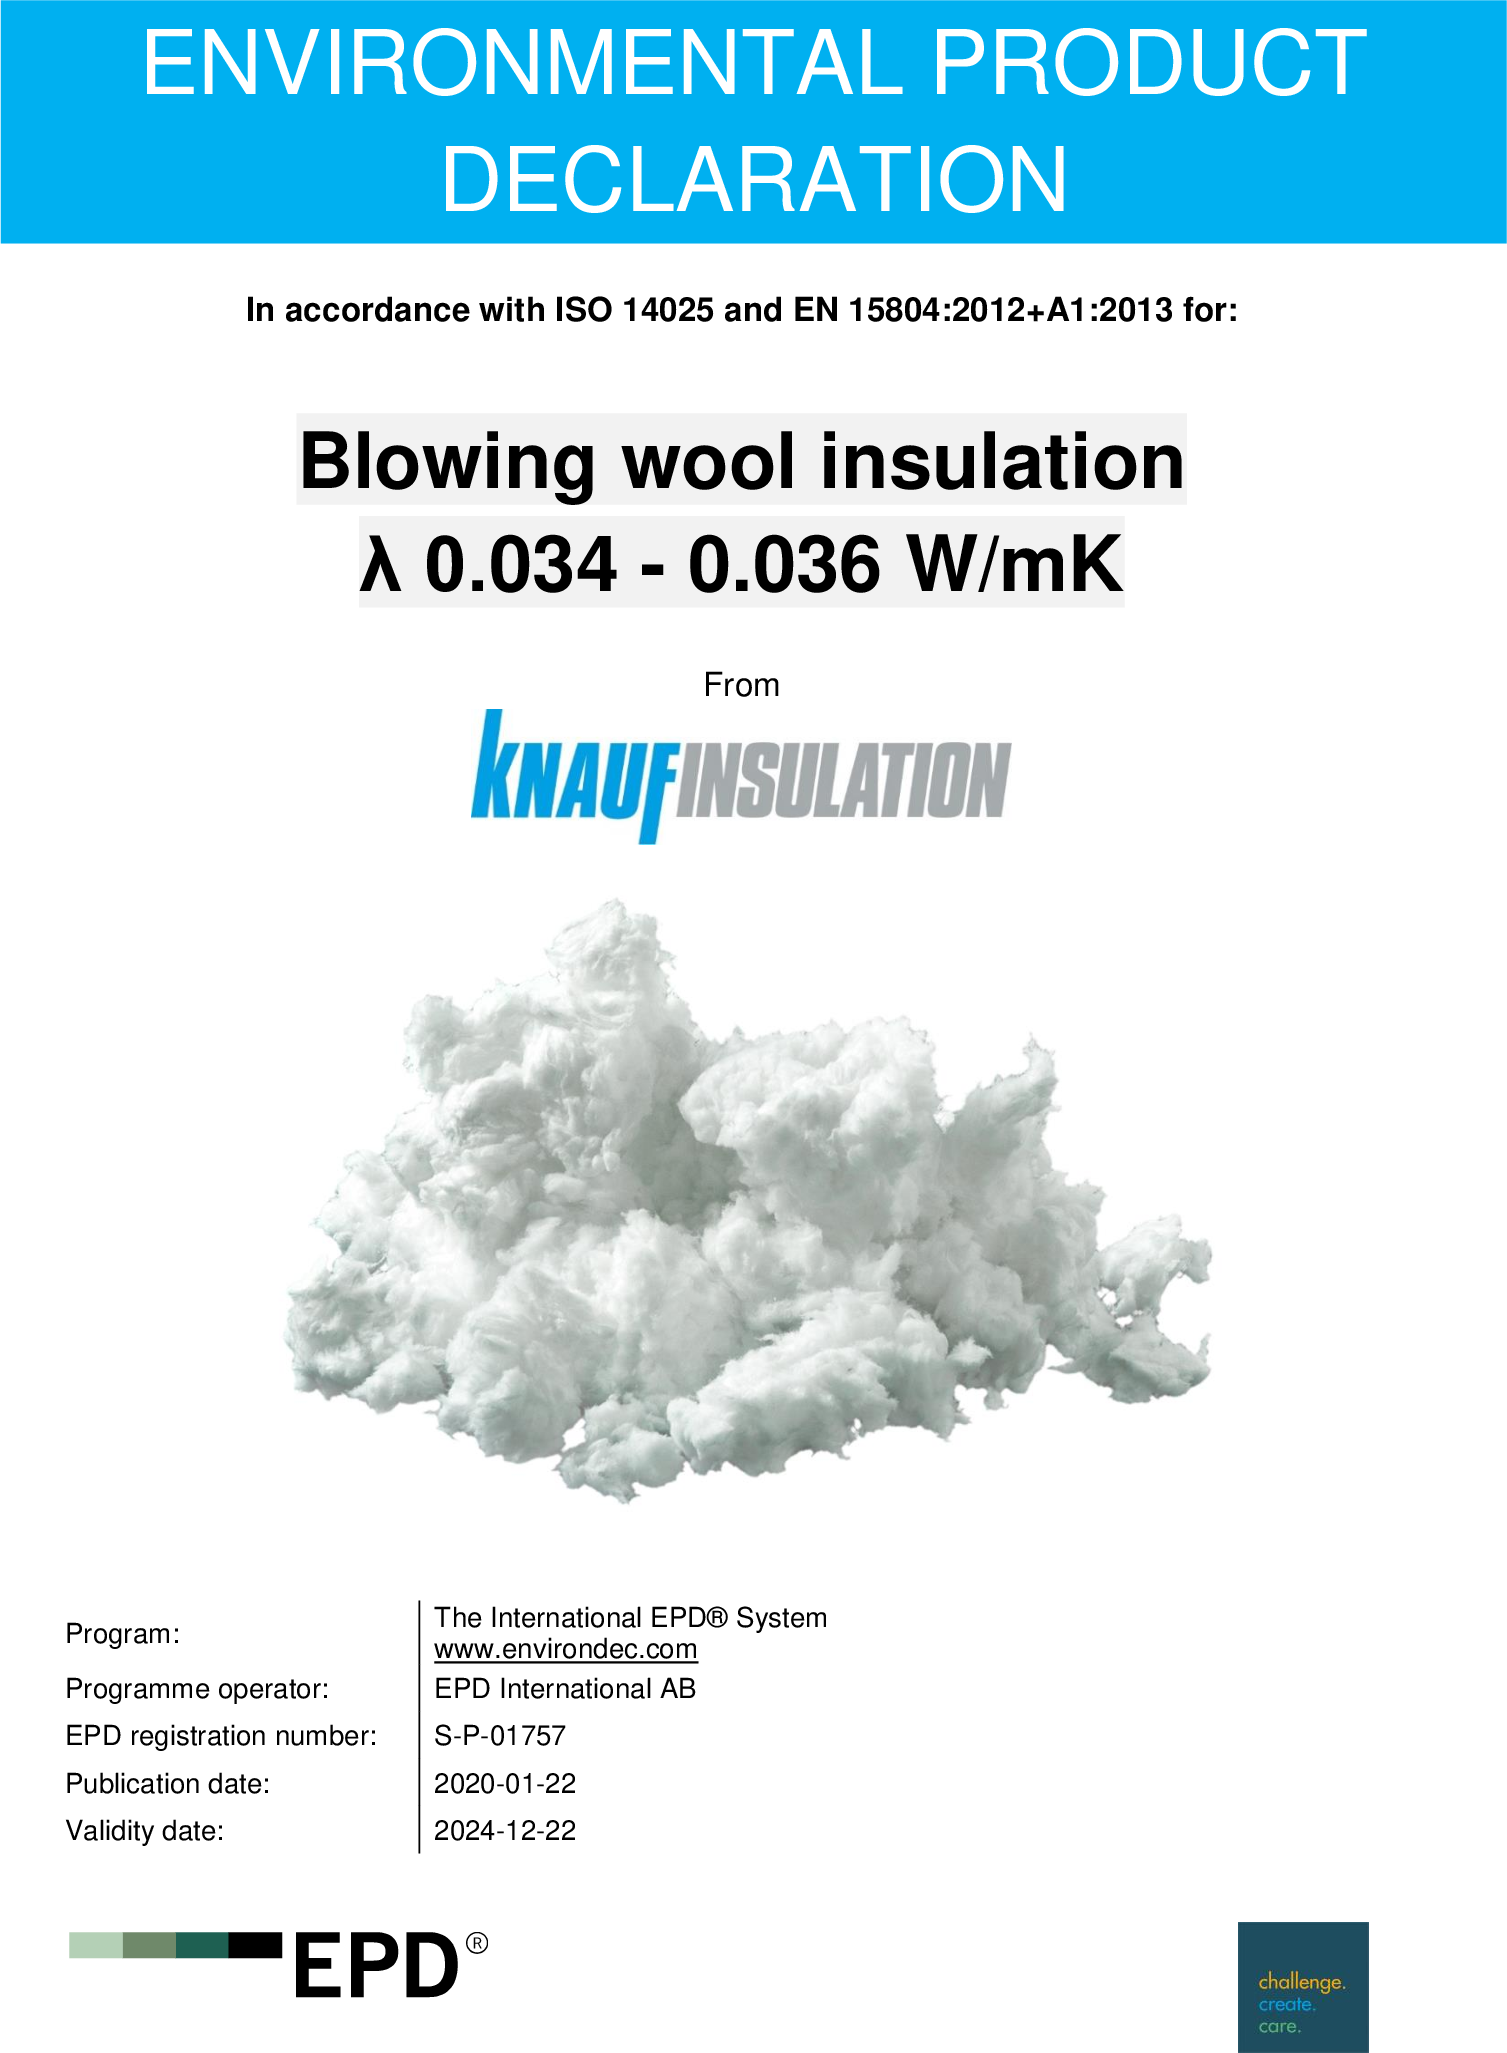 Blowing wool insulation λ 0.034 - 0.036 W/mK